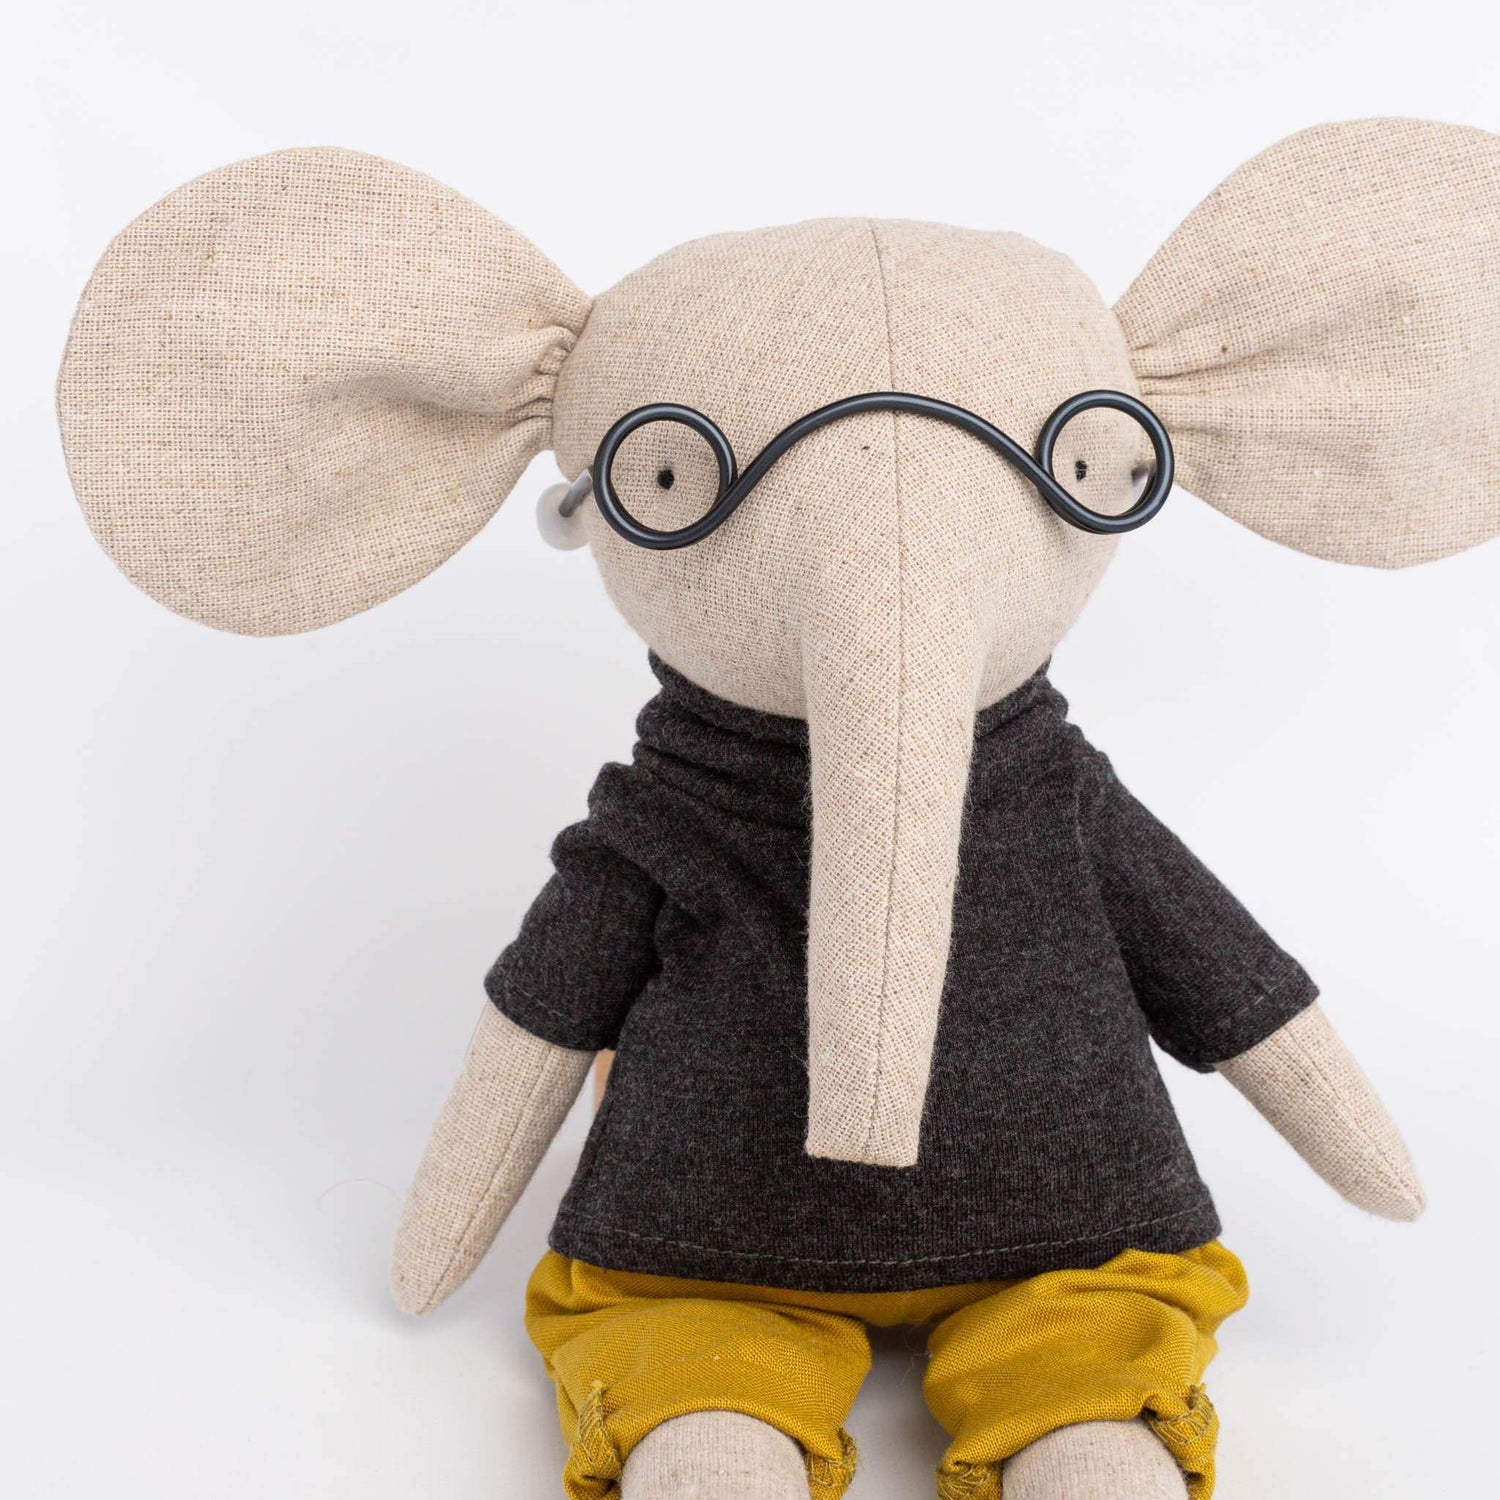 Cozymoss Soft Toys Elephant Thyme - Handmade Soft Linen Toy Elephant with Clothes Set